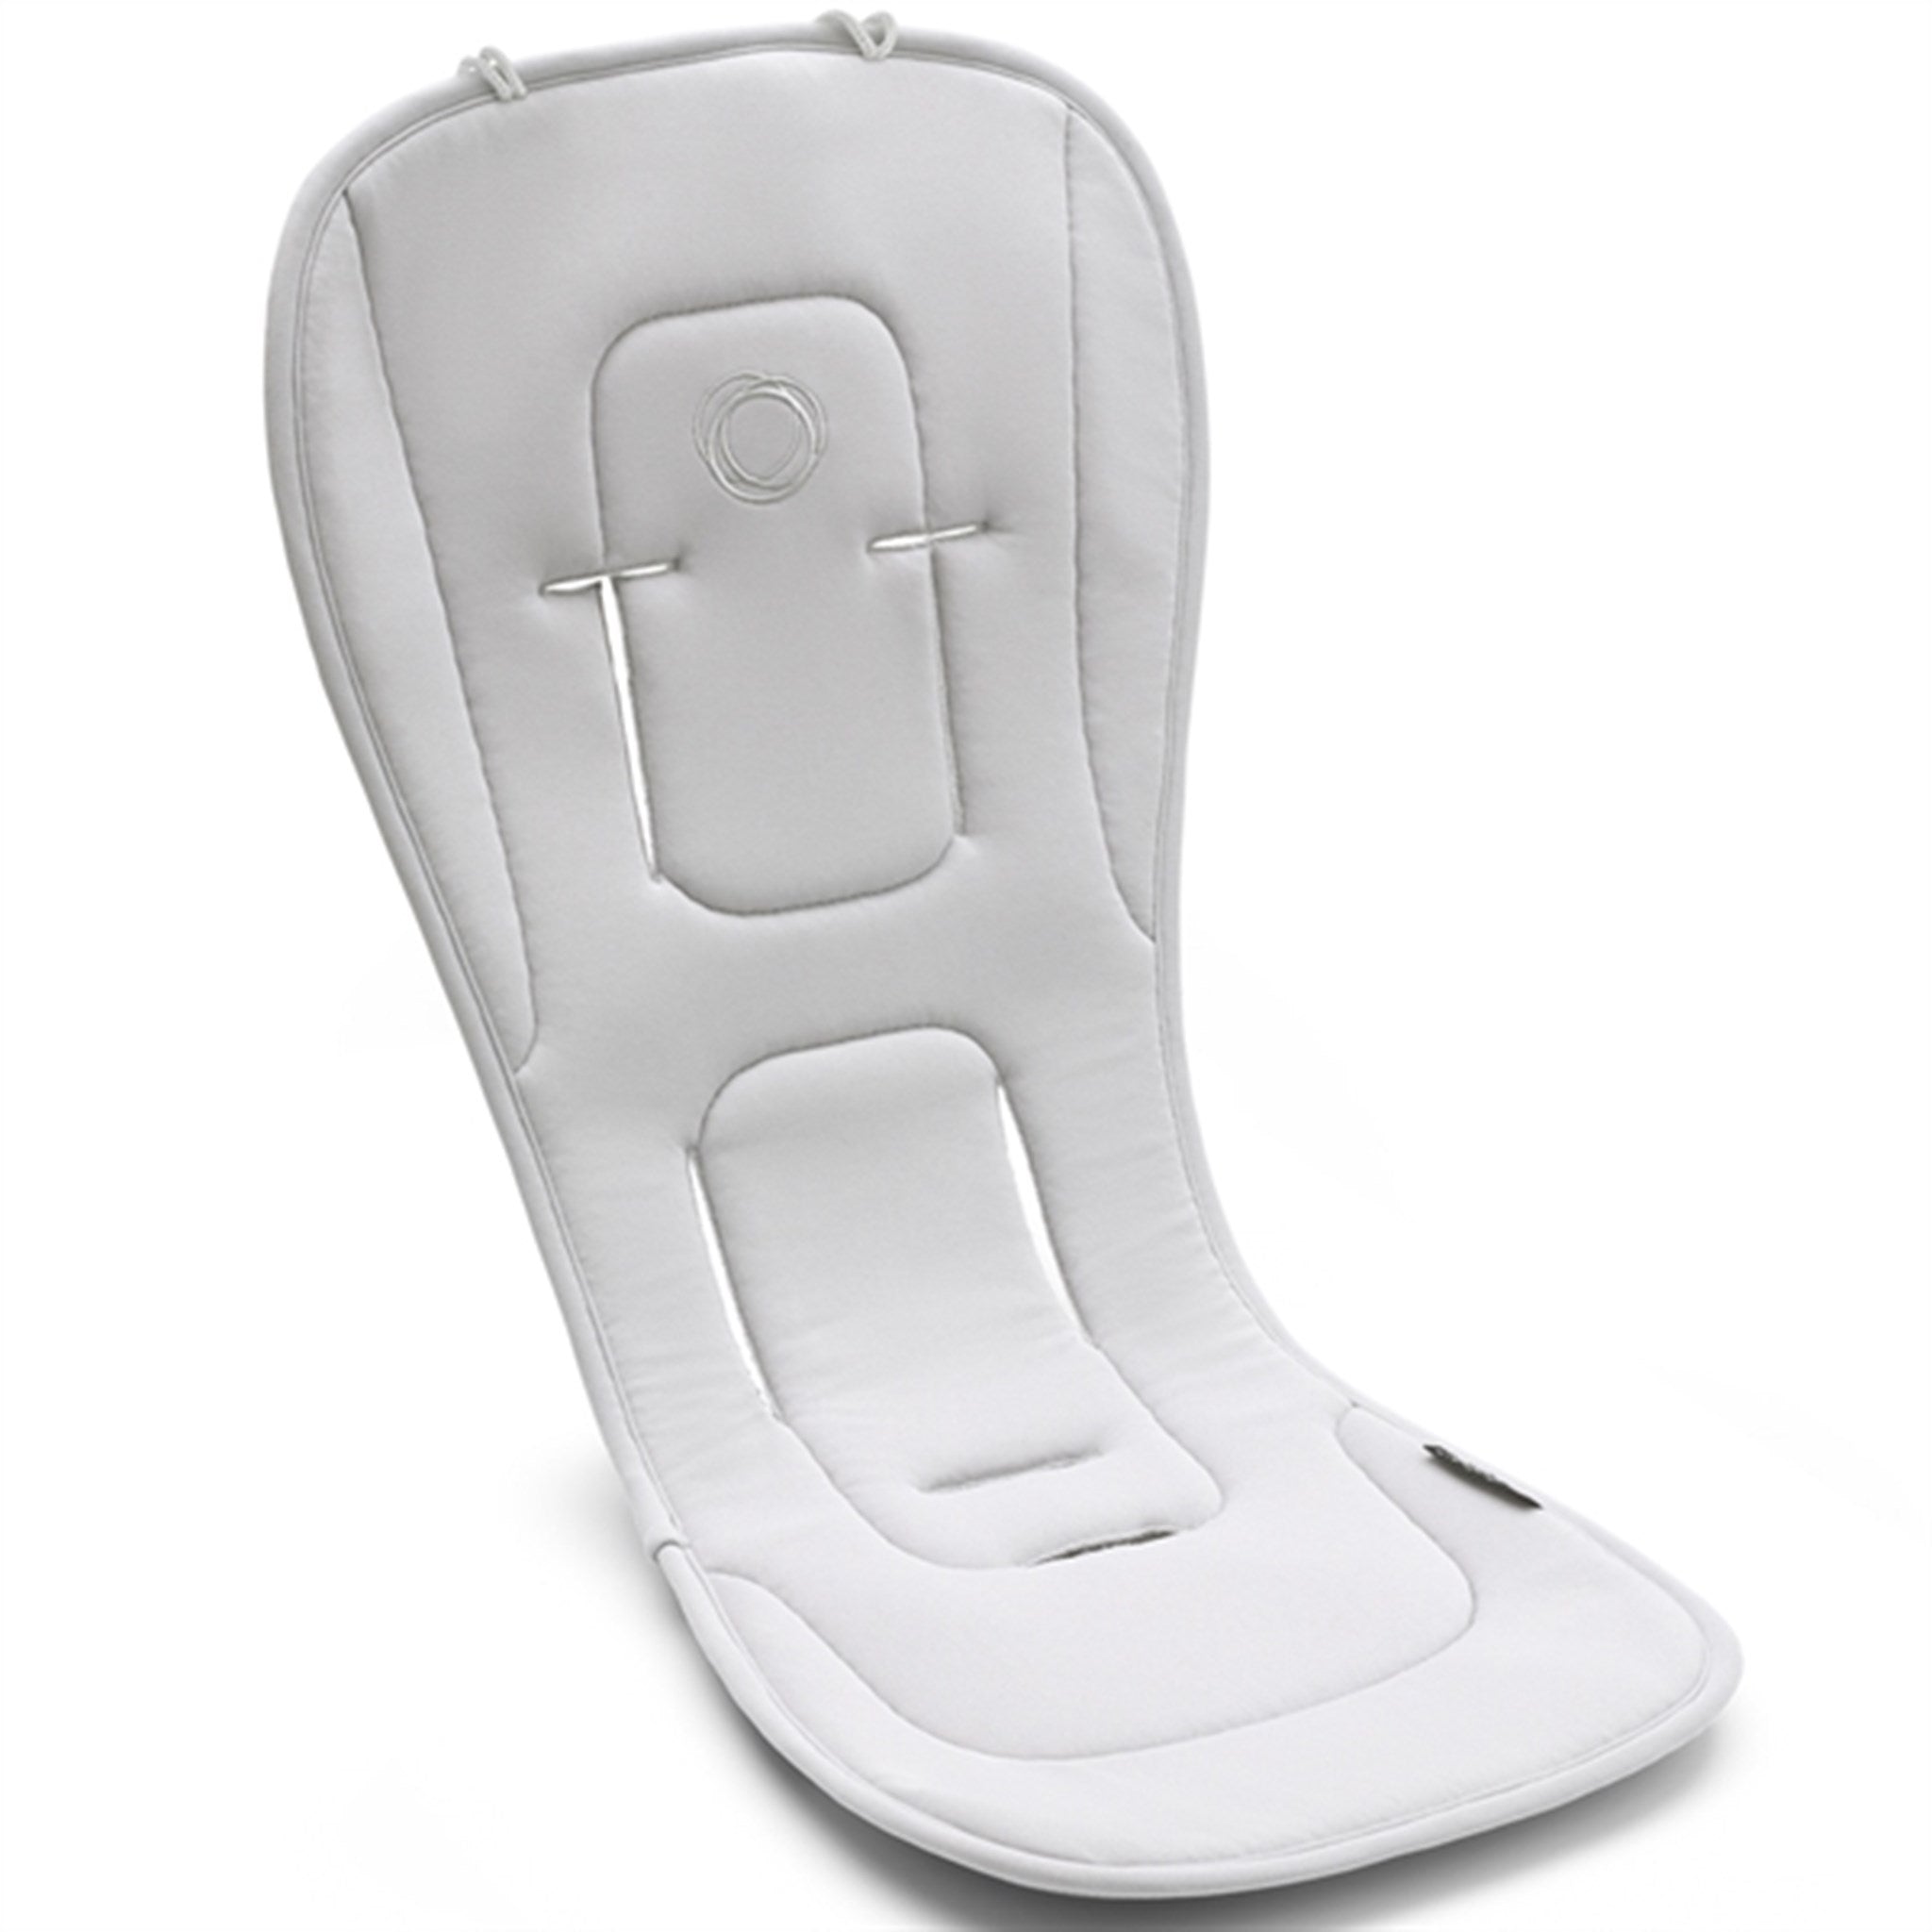 Bugaboo Dual Comfort Seat Liner Misty Grey